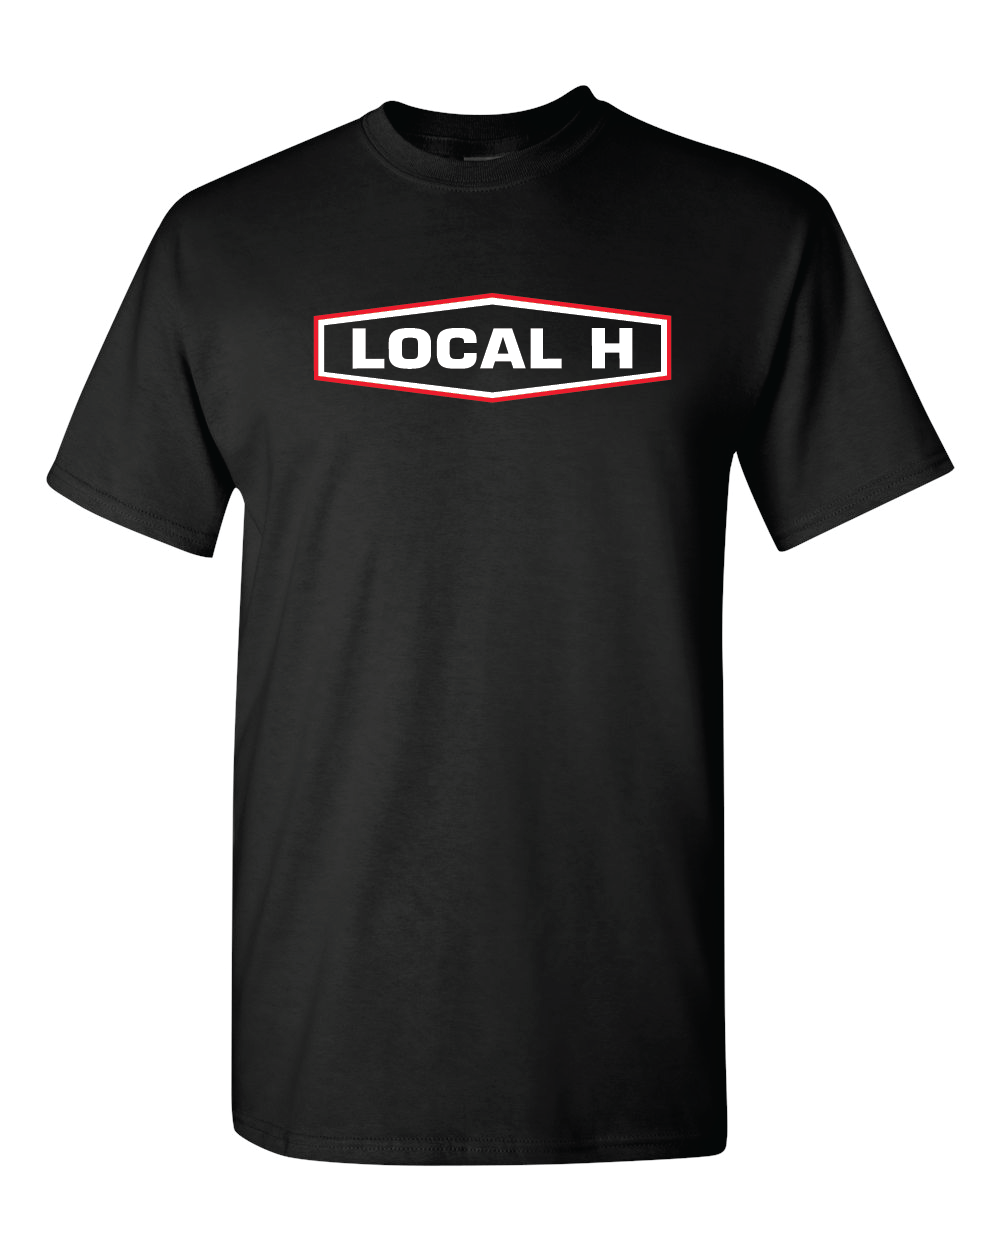 Shirt Brand Logo - Local H logo Tee shirt